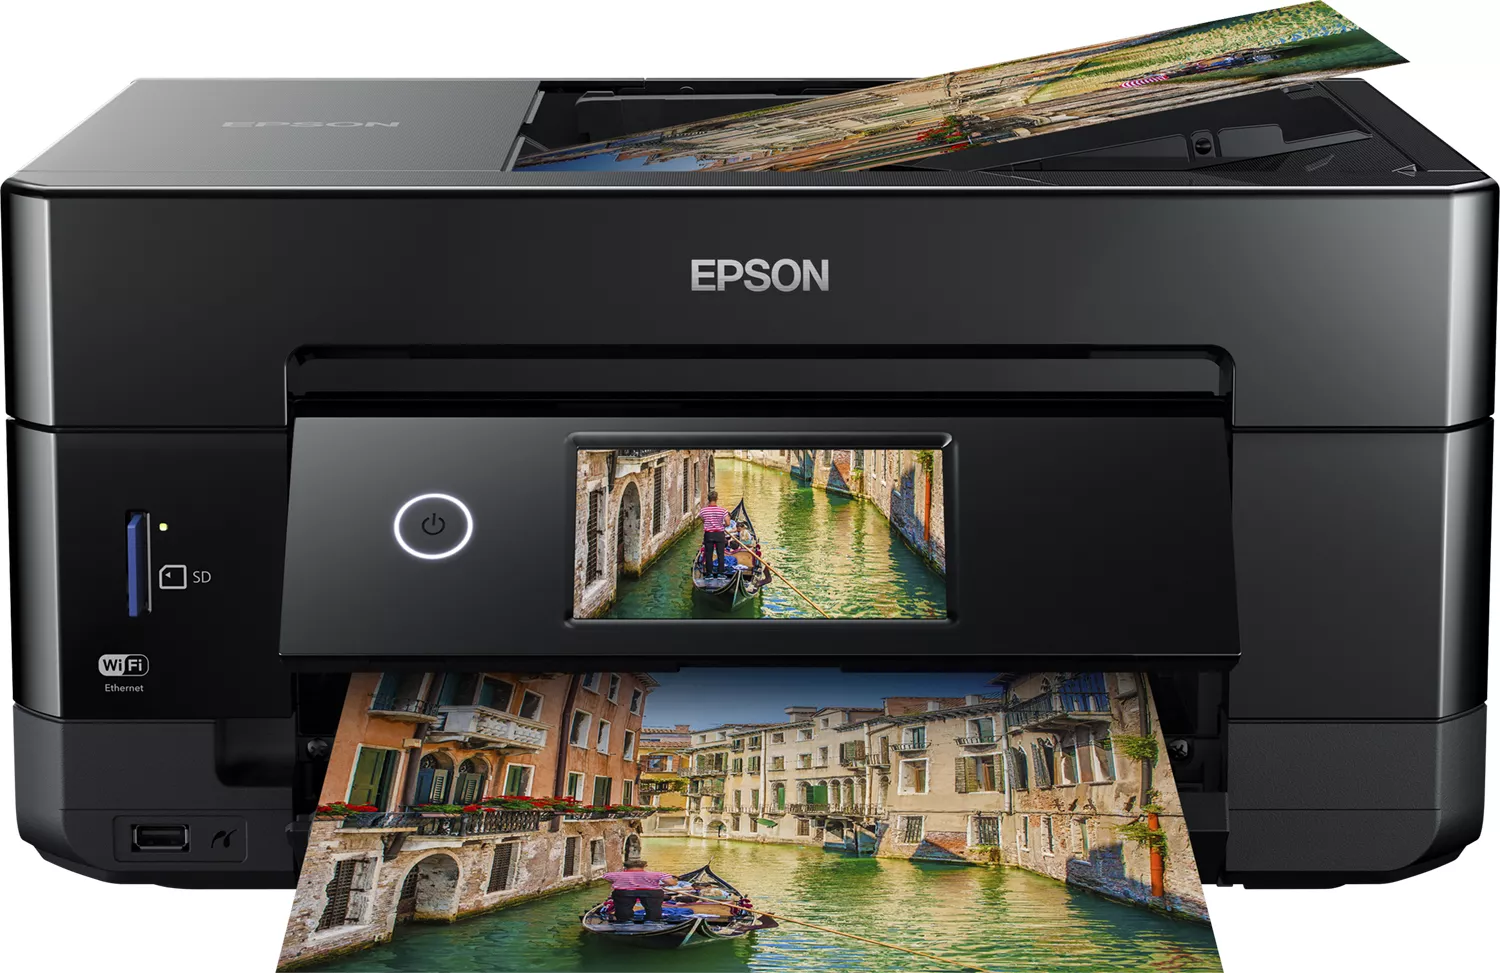 Vente EPSON Expression Premium XP-7100 Small-in-One MFP au meilleur prix